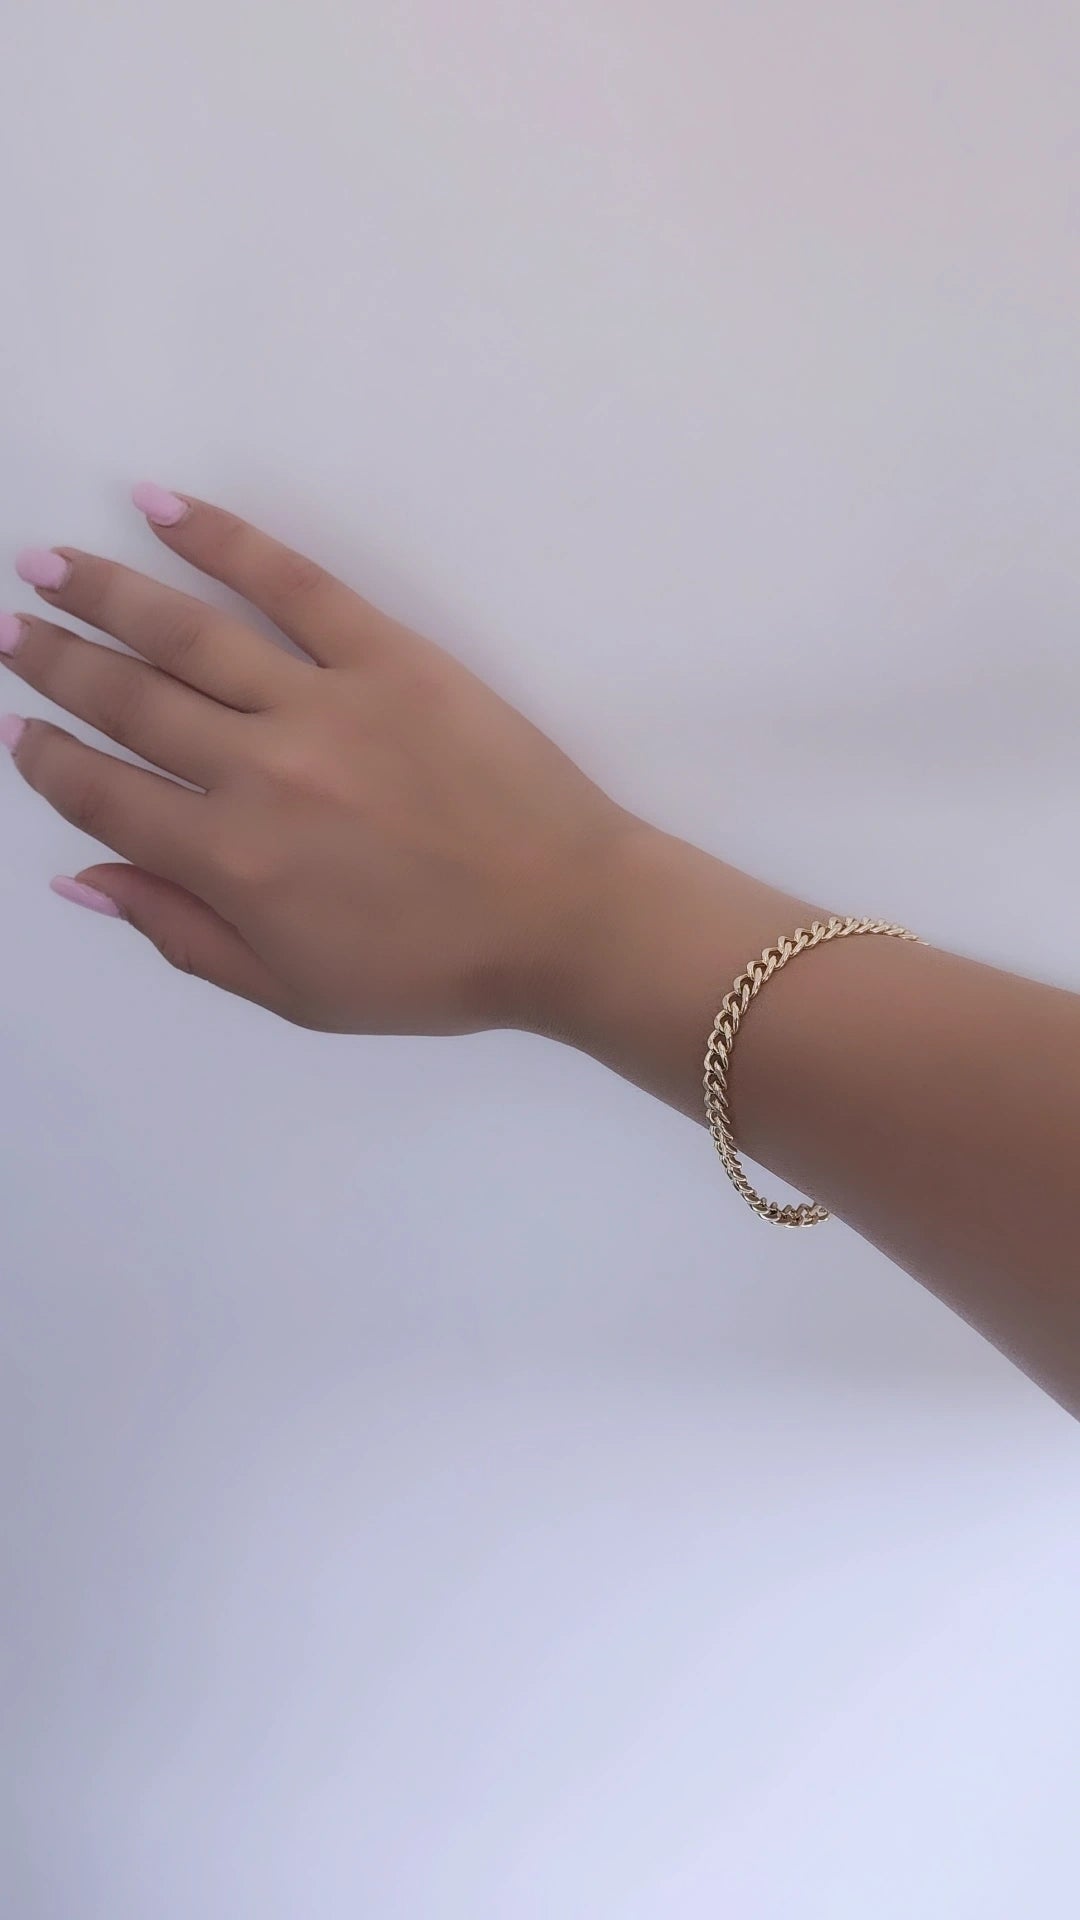 Softones 5pcs Bangle Rose Gold Bracelets for Women Girls Heart|Olive  Leaf|Arrow|Feather|Knot Heart Open Cuff Bracelet Set Adjustable | Stylish  jewelry, Jewelry accessories ideas, Preppy jewelry